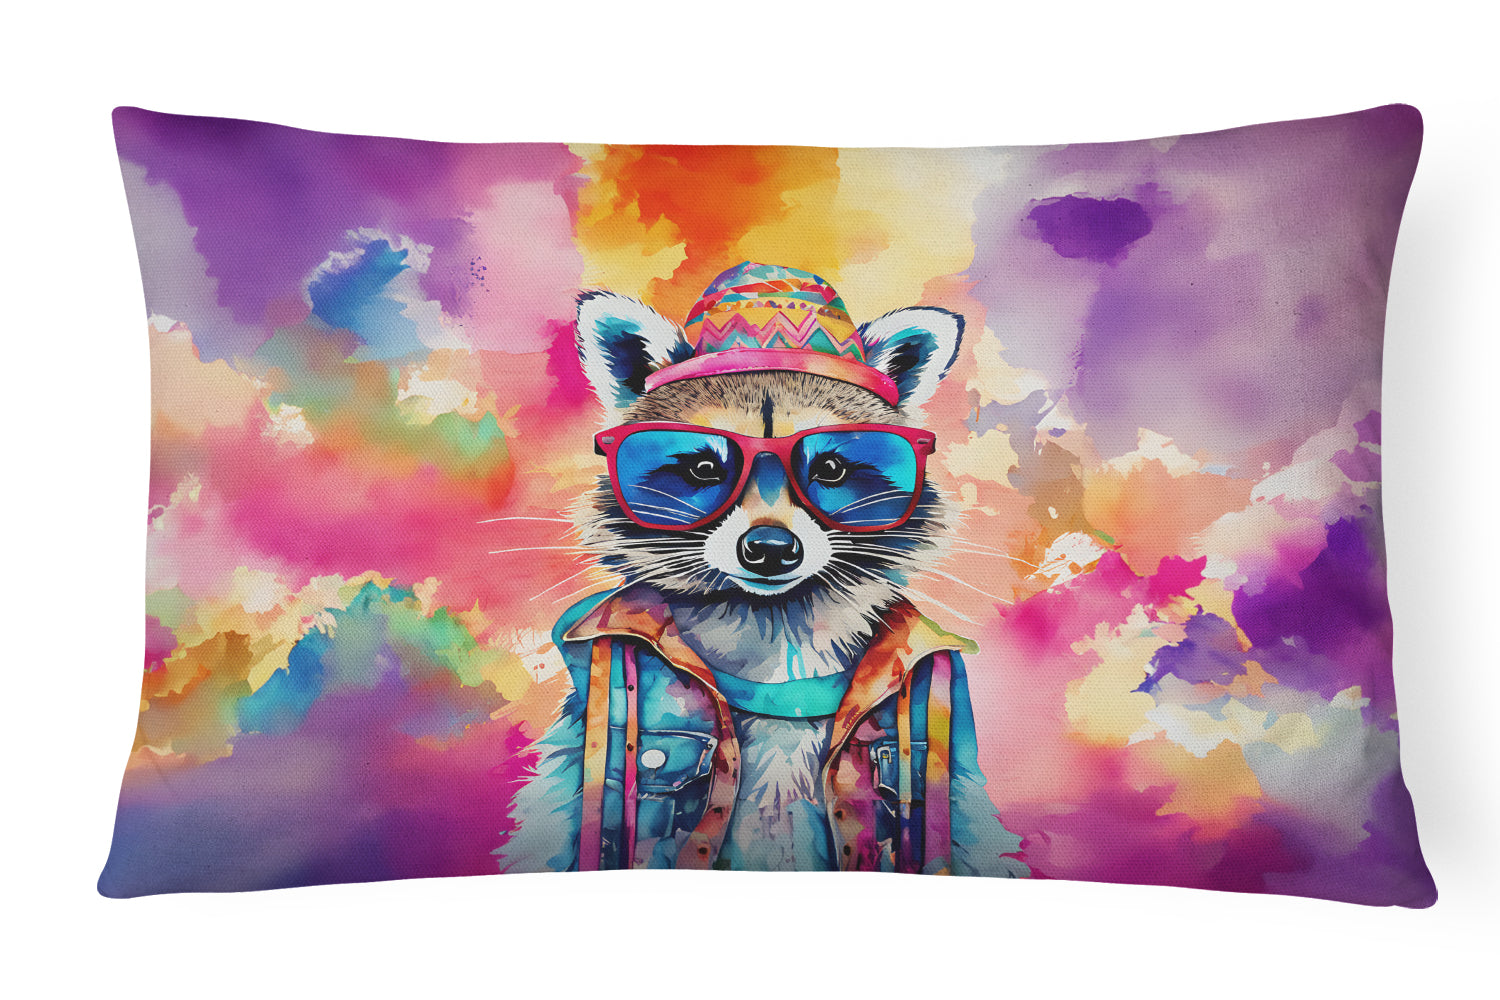 Buy this Hippie Animal Raccoon Throw Pillow